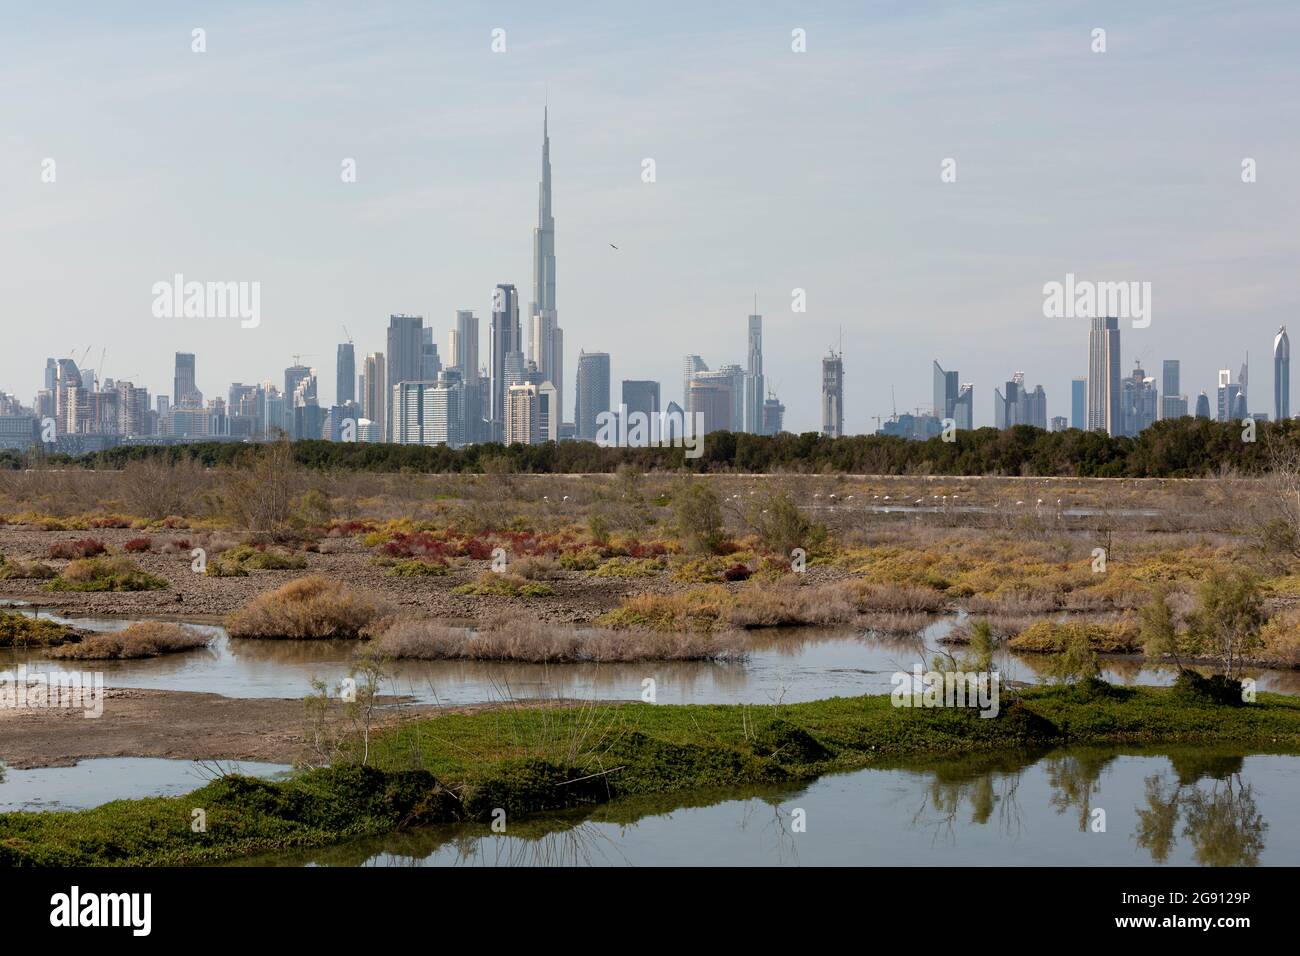 The impressive skyline of downtown Dubai with the world's highest building Burj Khalifa as seen from the nature reserve Ras al Khor. Stock Photo